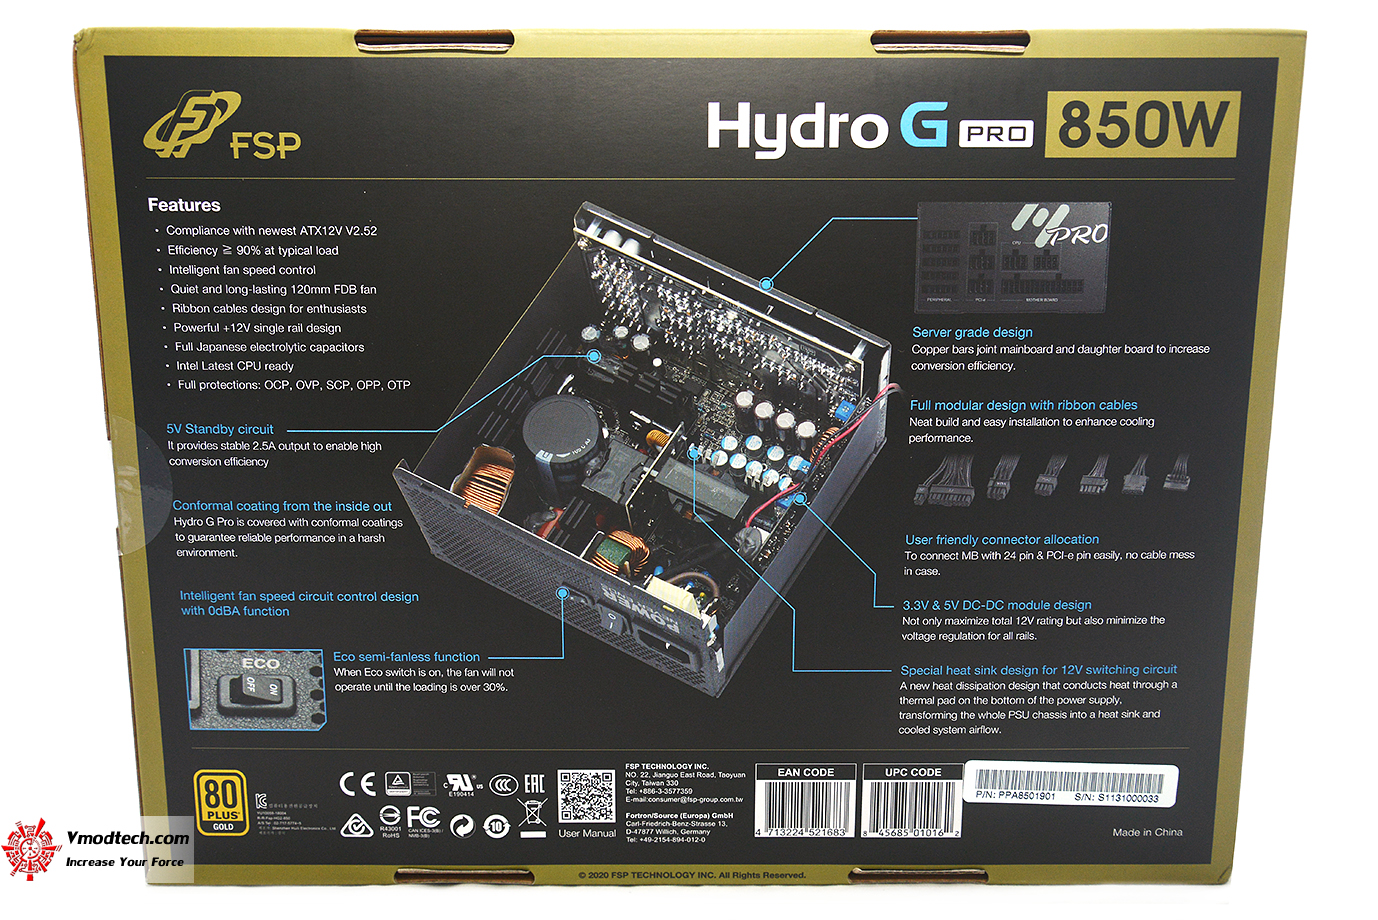 dsc 4504 FSP HYDRO G PRO 850W REVIEW